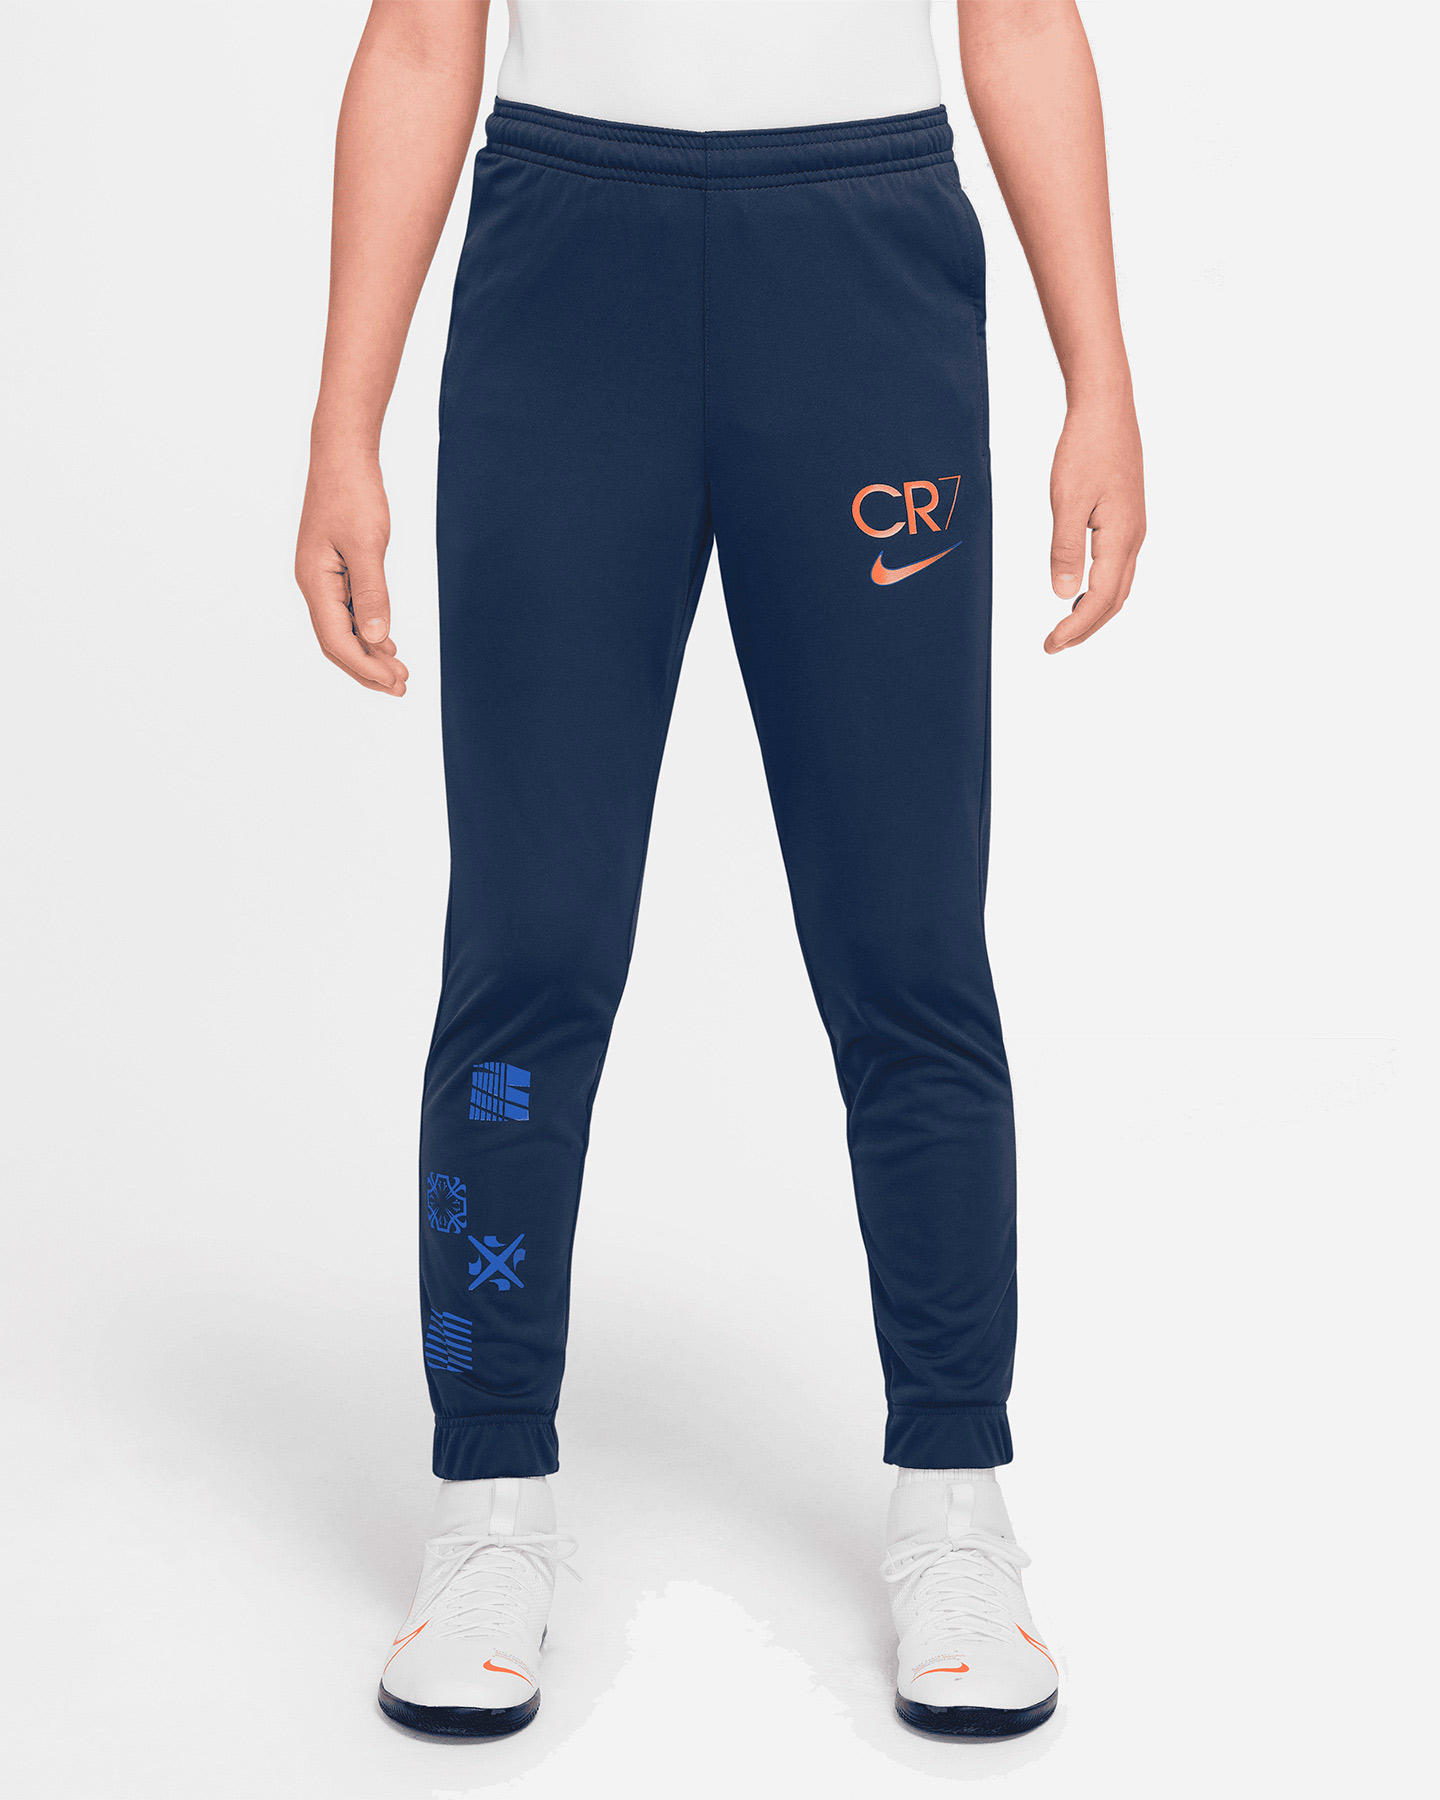 Nike Cr7 Dry Navy Jr - Pantaloncini Calcio